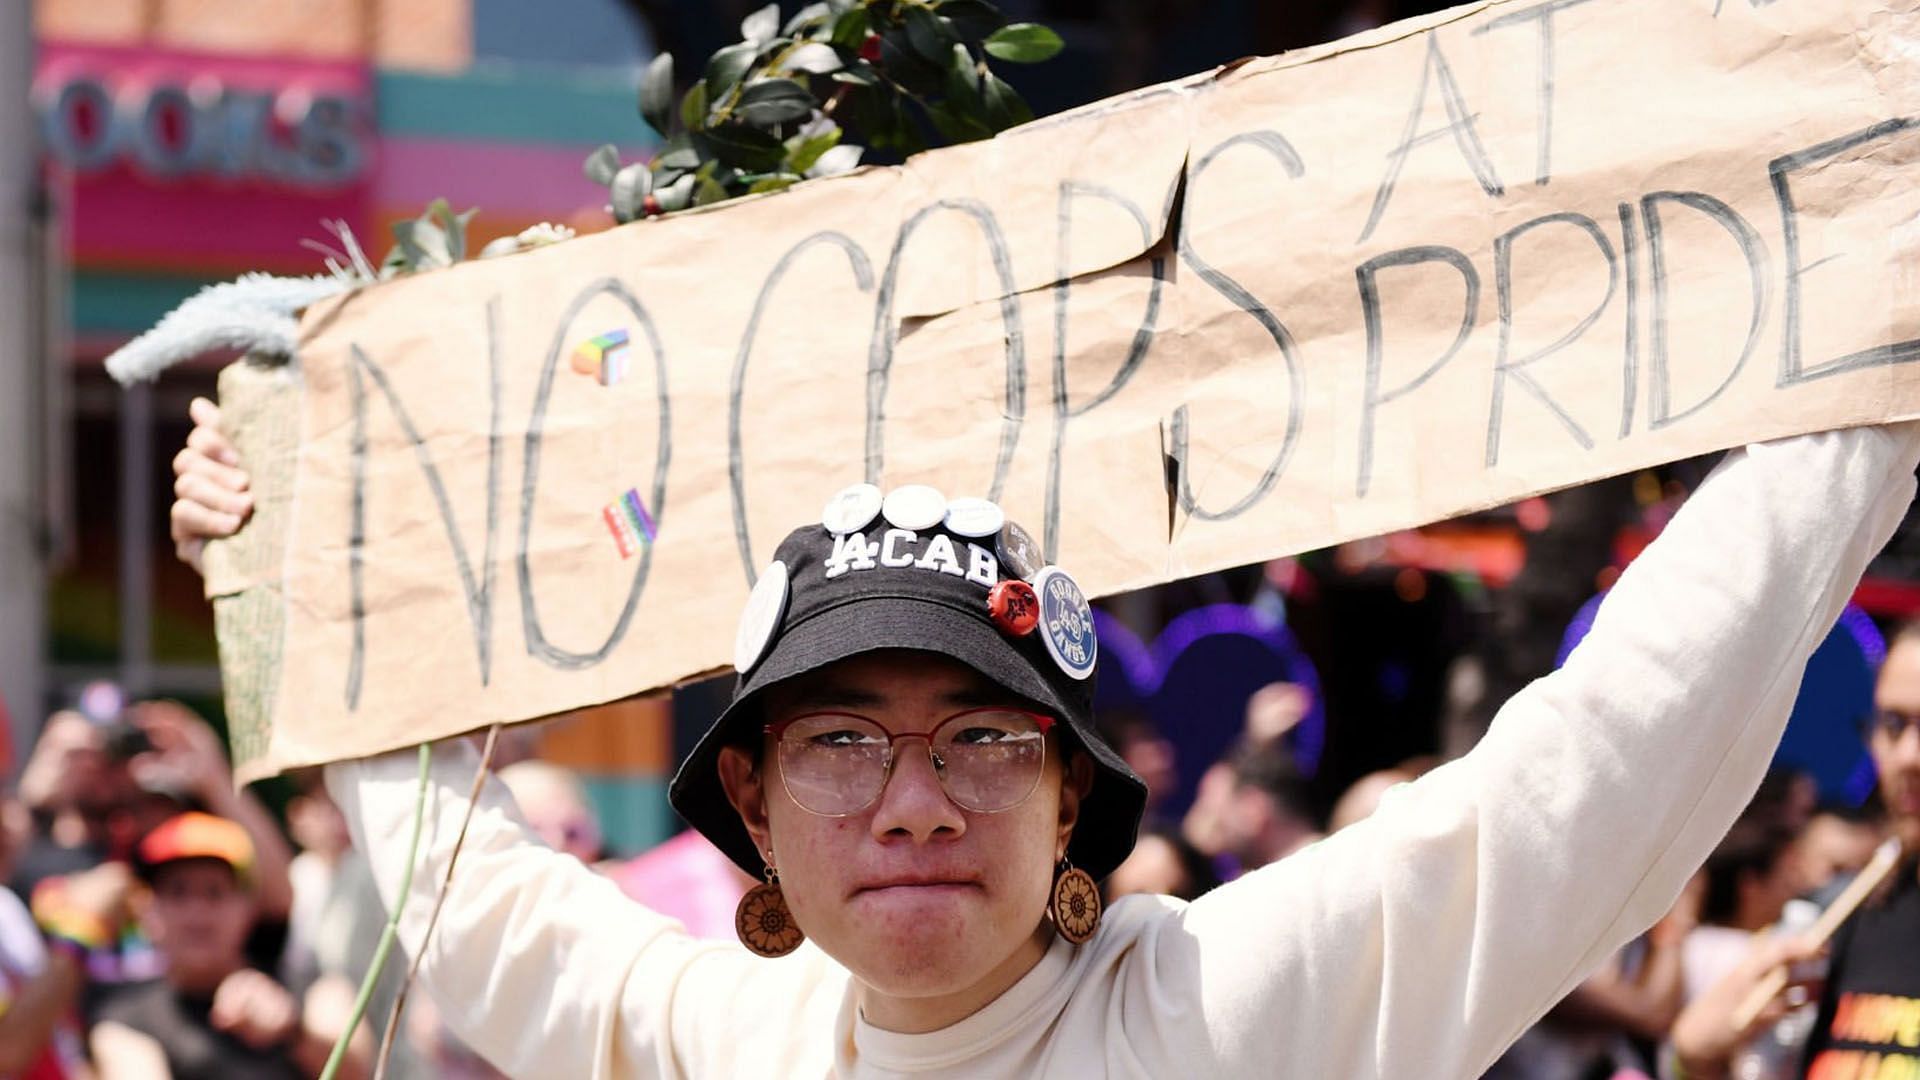 WeHo Pride festival arrest has left netizens fuming (Image via Getty Images)